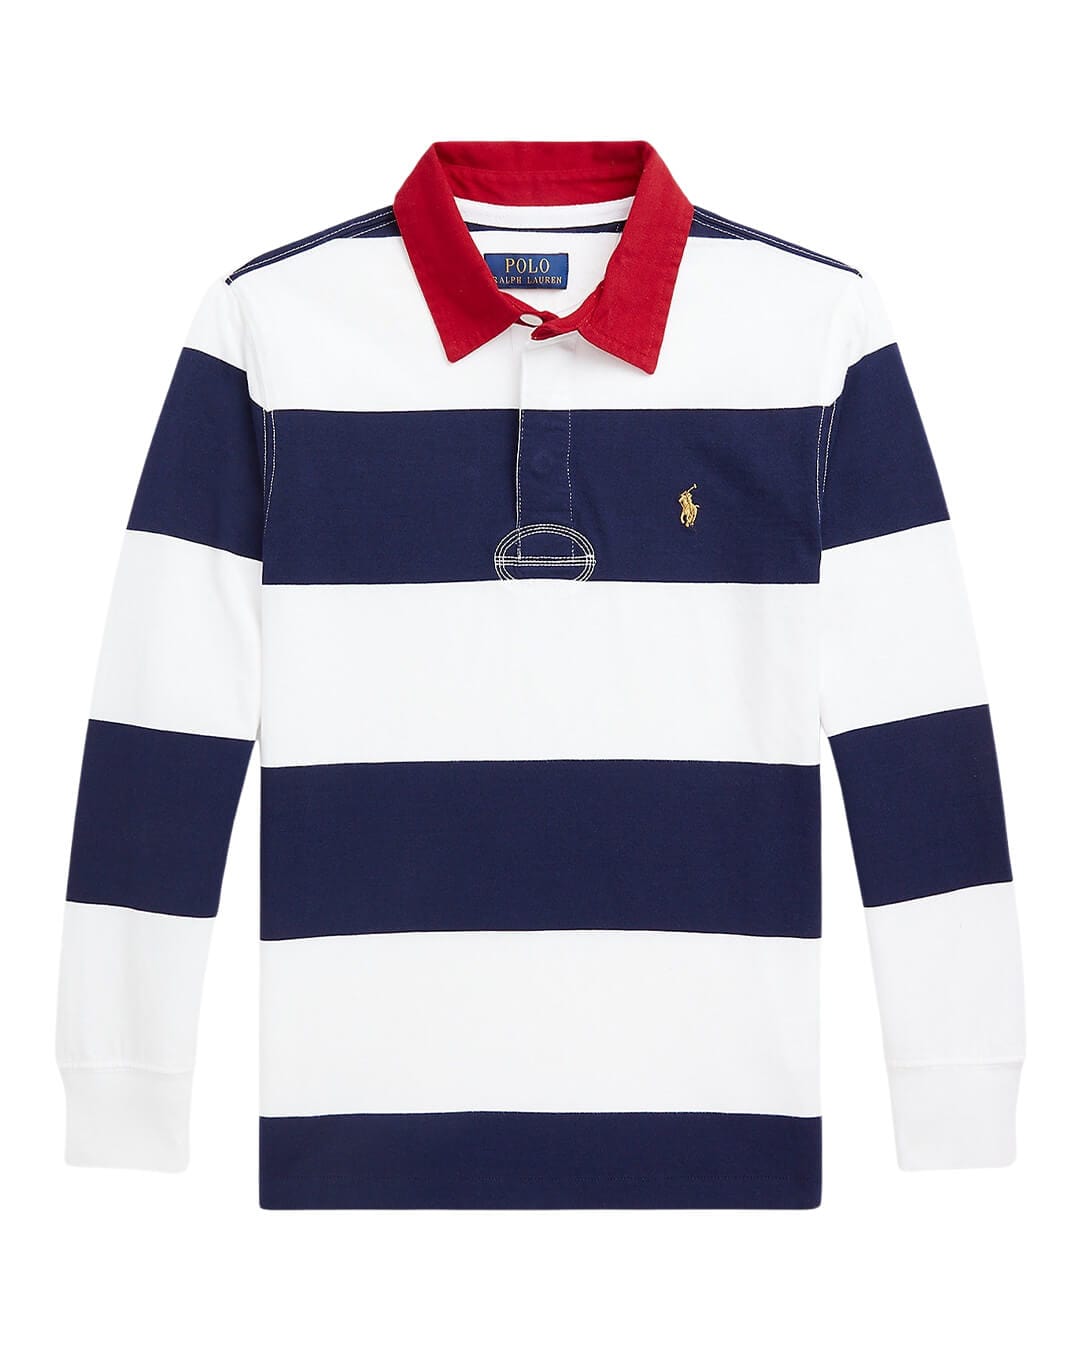 Polo Ralph Lauren Polo Shirts Boys Polo Ralph Lauren Navy Striped Cotton Jersey Rugby Shirt